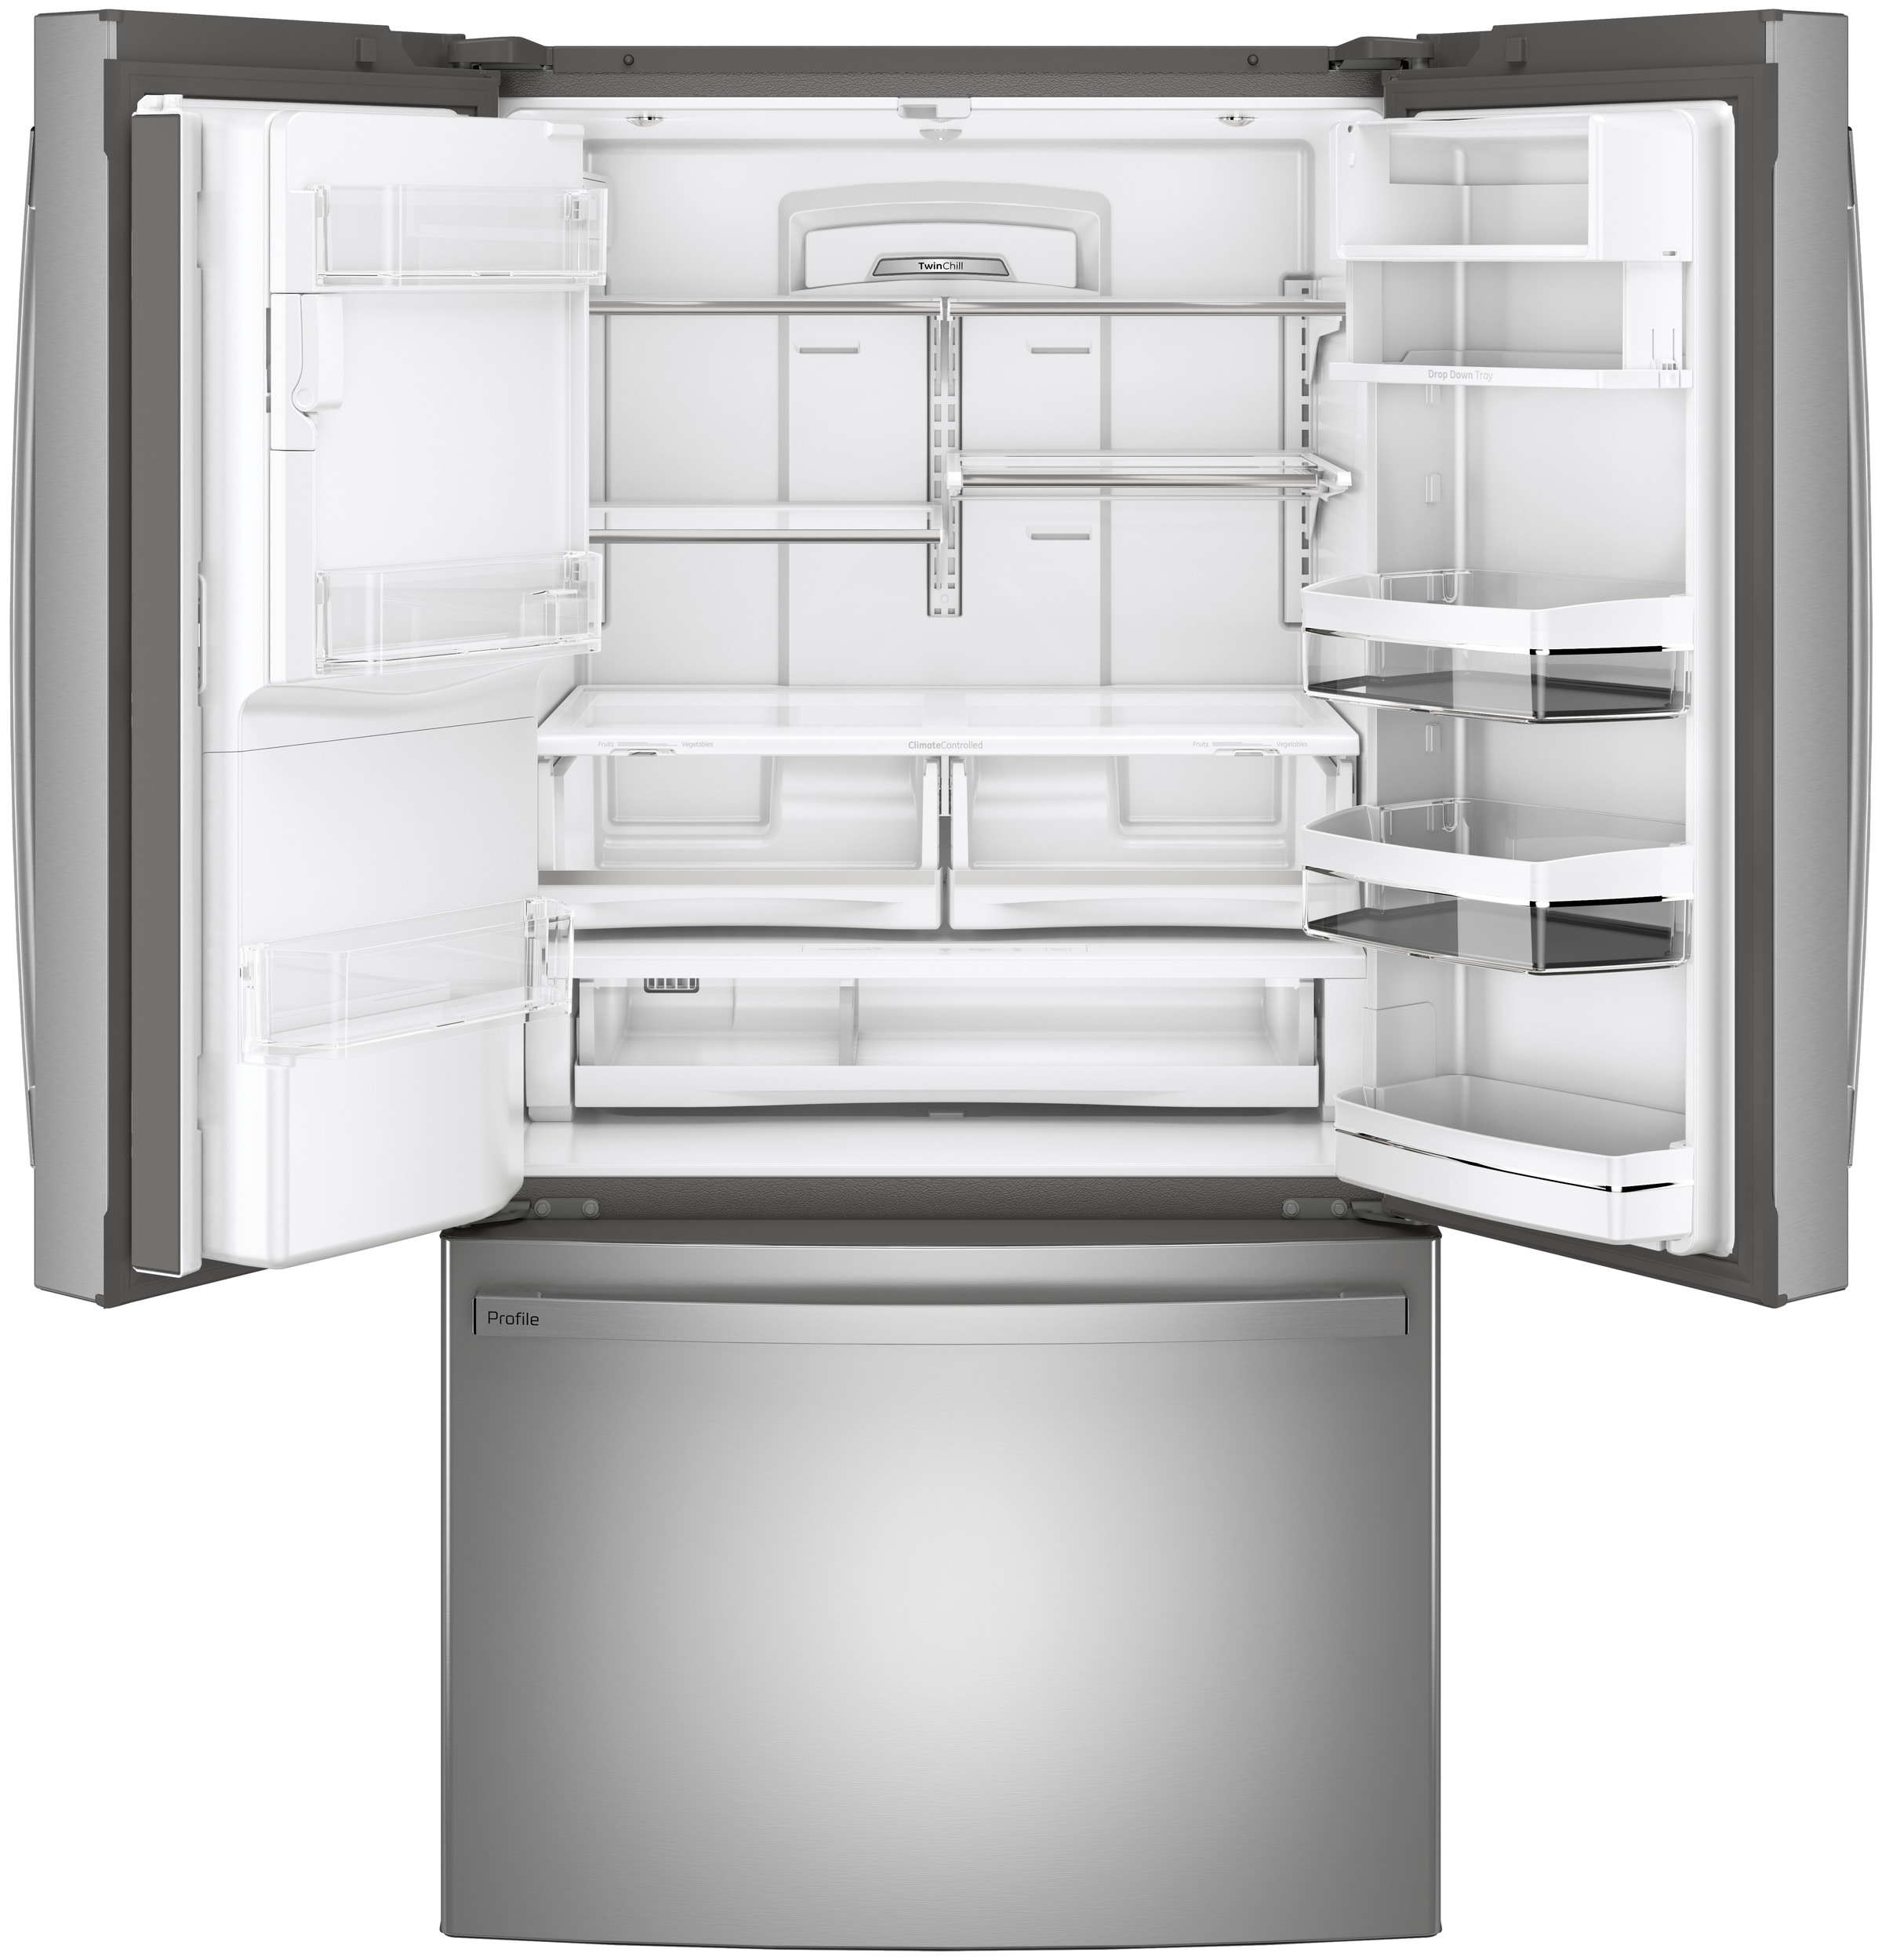 GE Refrigerator with Built-in Keurig Drink Dispenser - Today's Homeowner